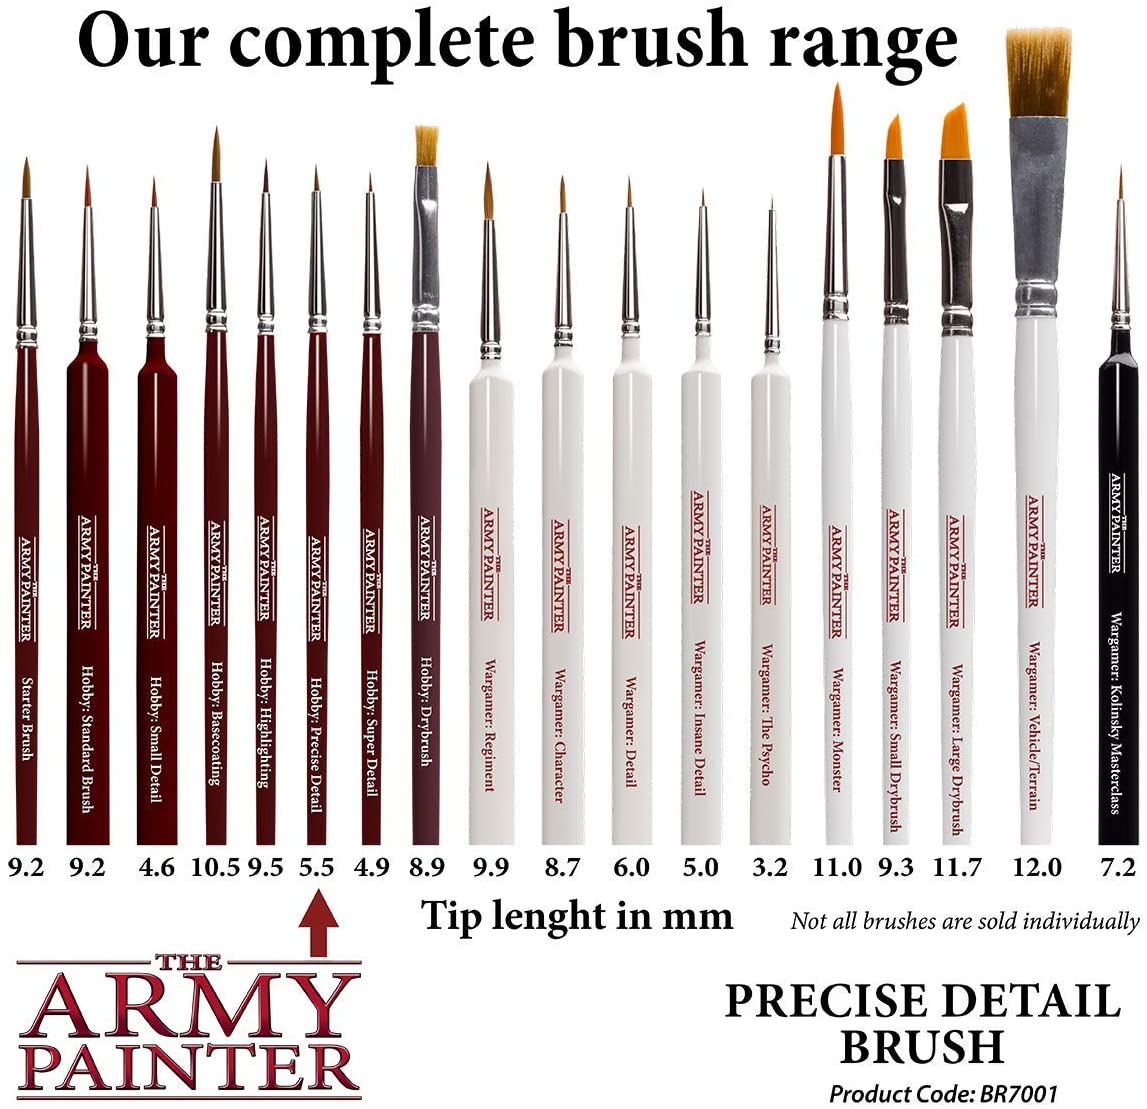 Army Painter Brush: Hobby: Precise Detail